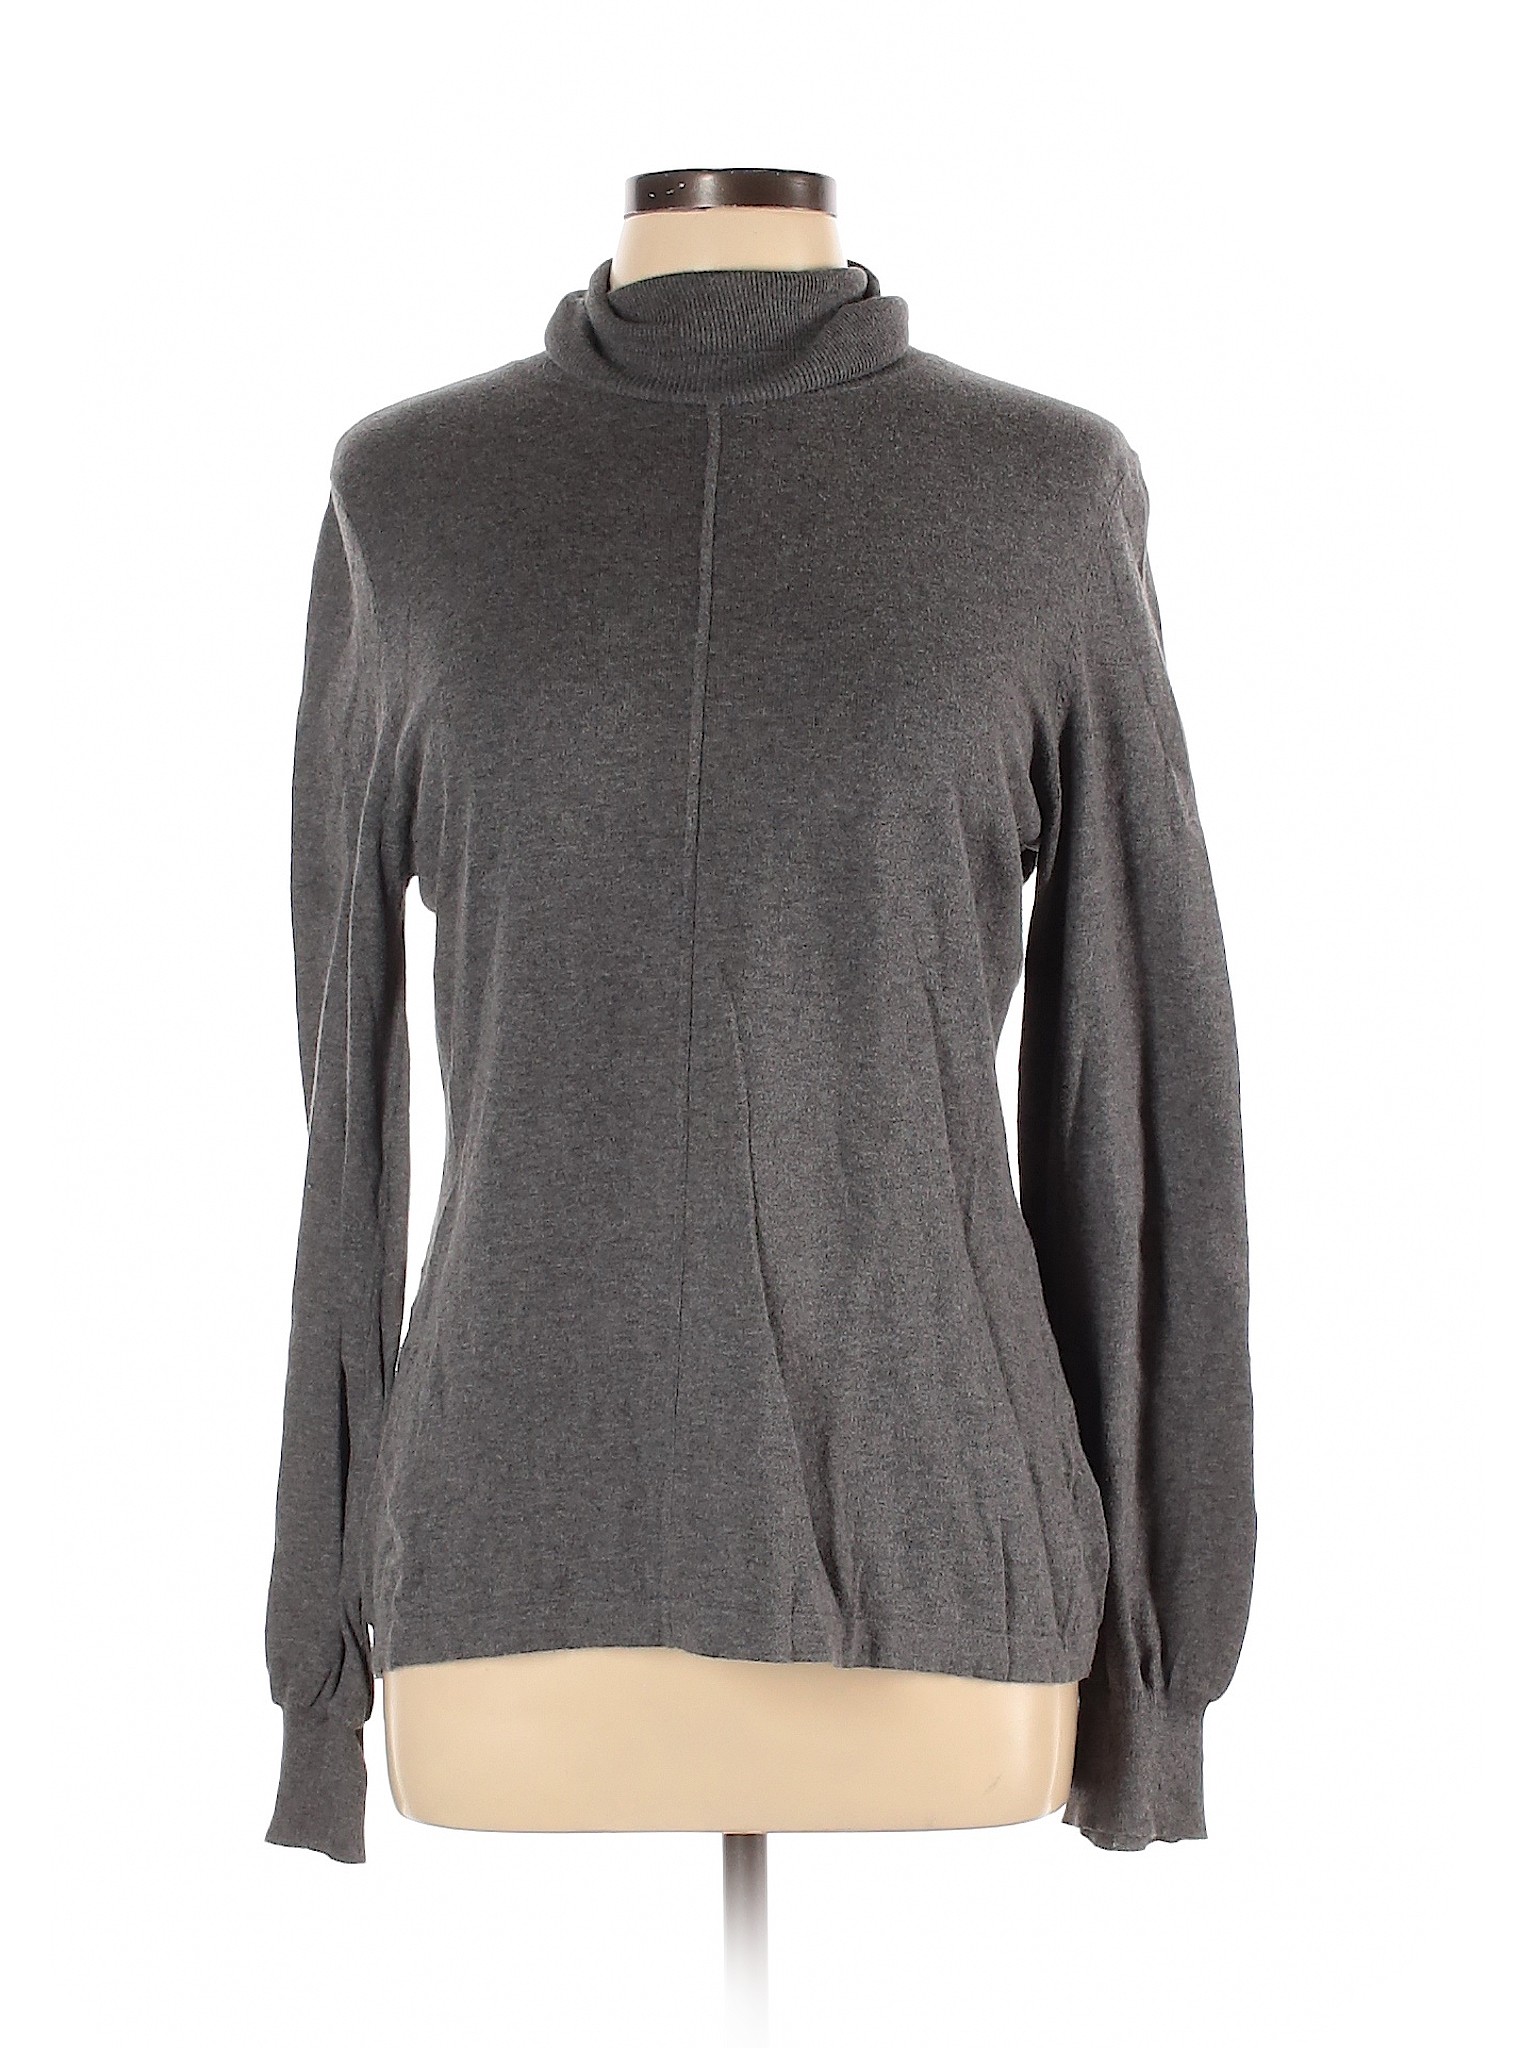 CAbi Women Gray Turtleneck Sweater L | eBay